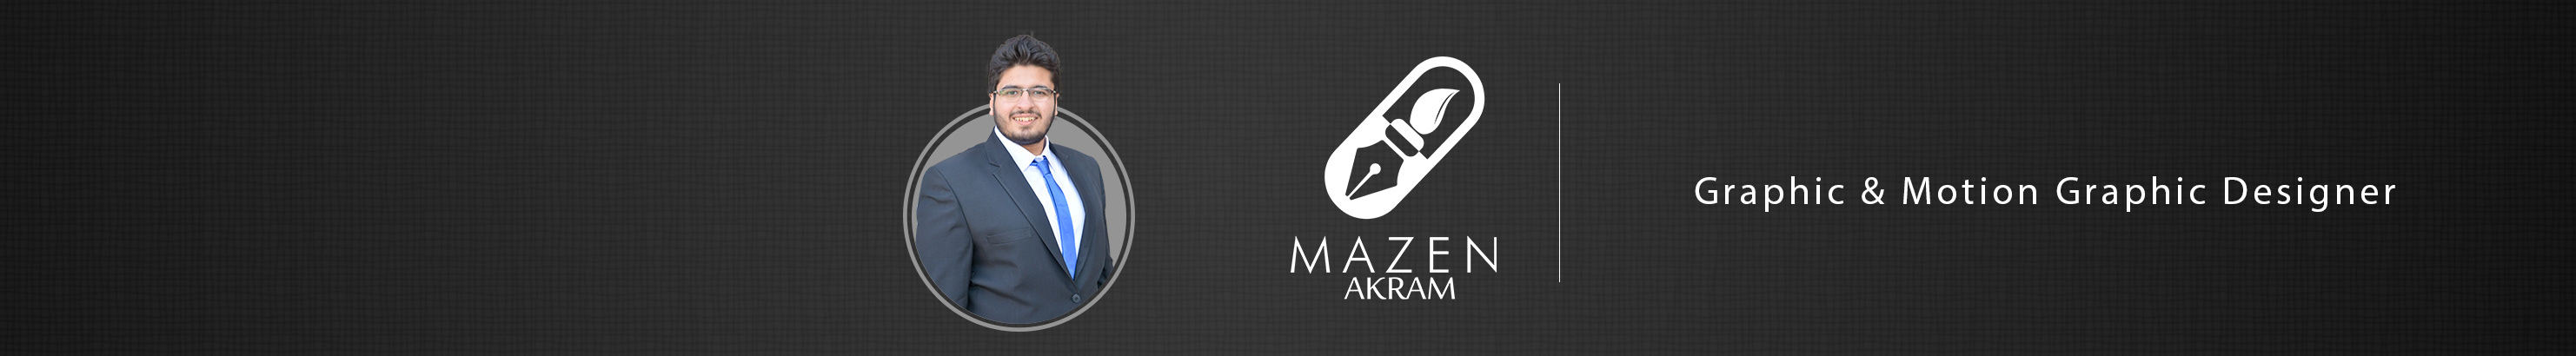 Profielbanner van Mazen Akram